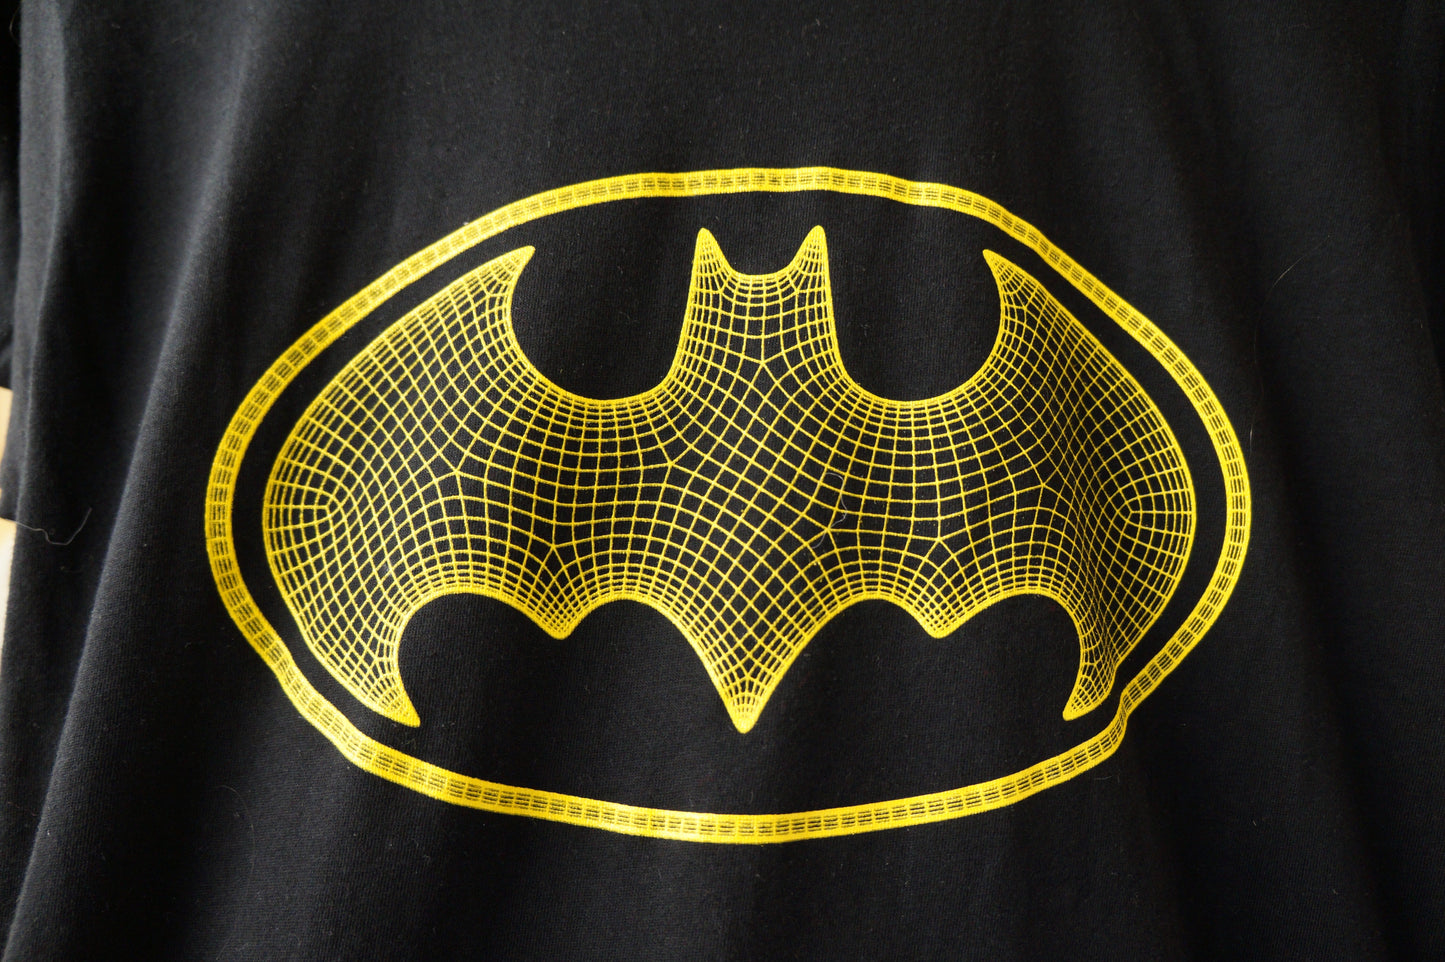 Camiseta Batman Frikhala